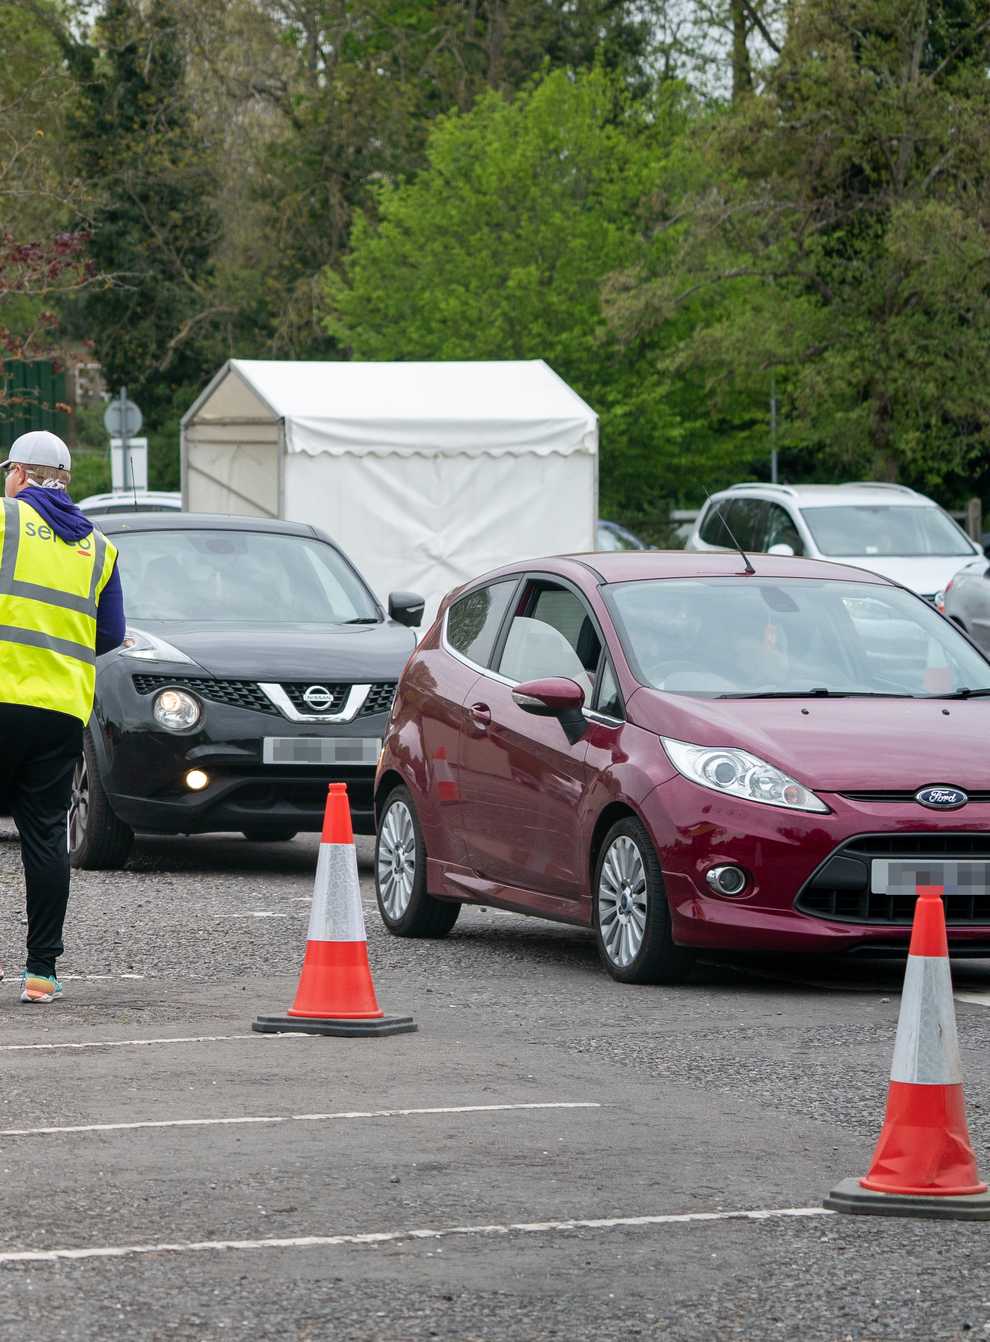 Cars queued at a coronavirus testing site